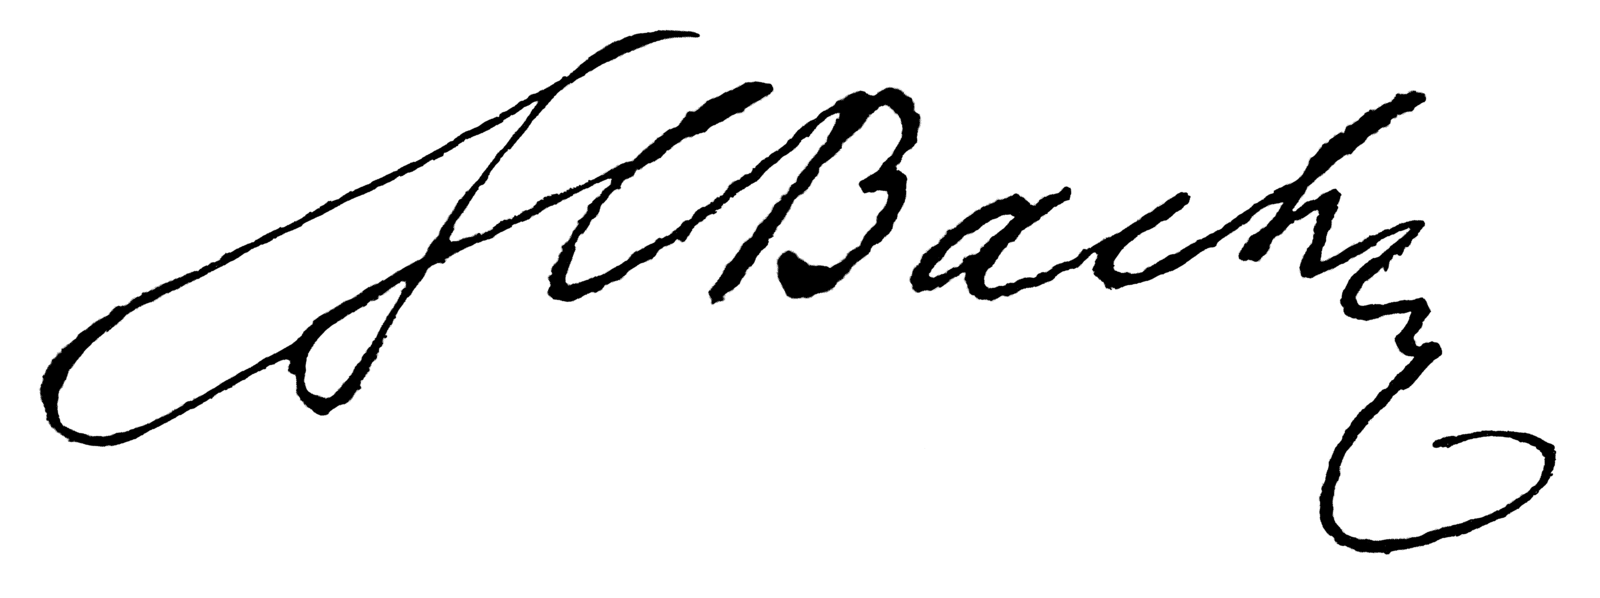 JCBach signature